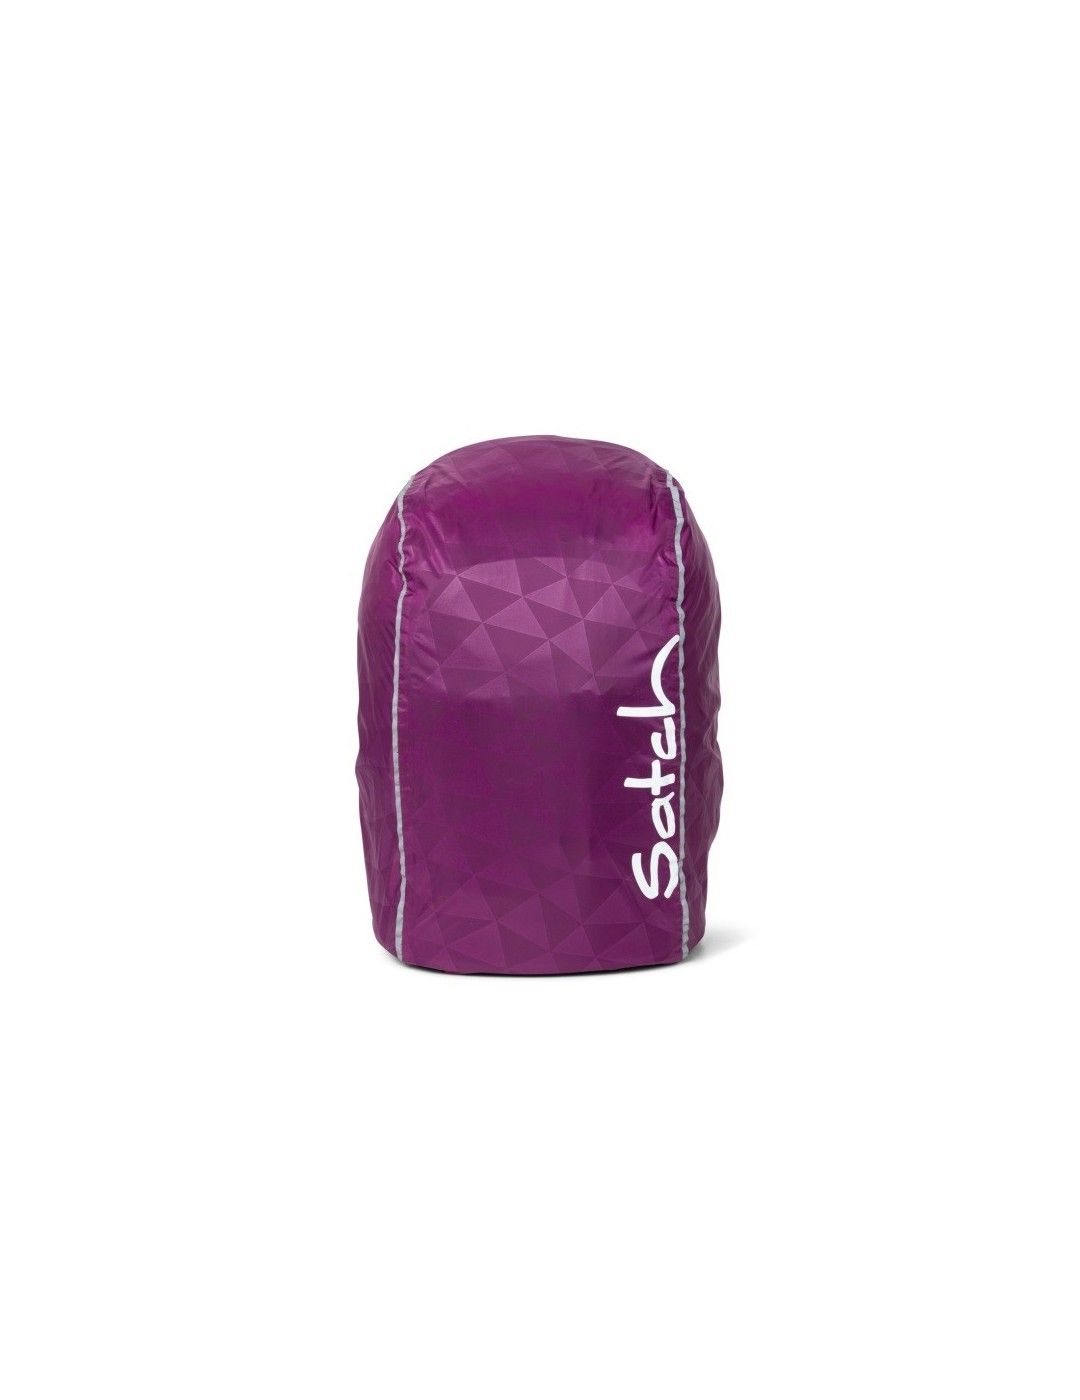 Satch Raincover Satch-Backpacks purple